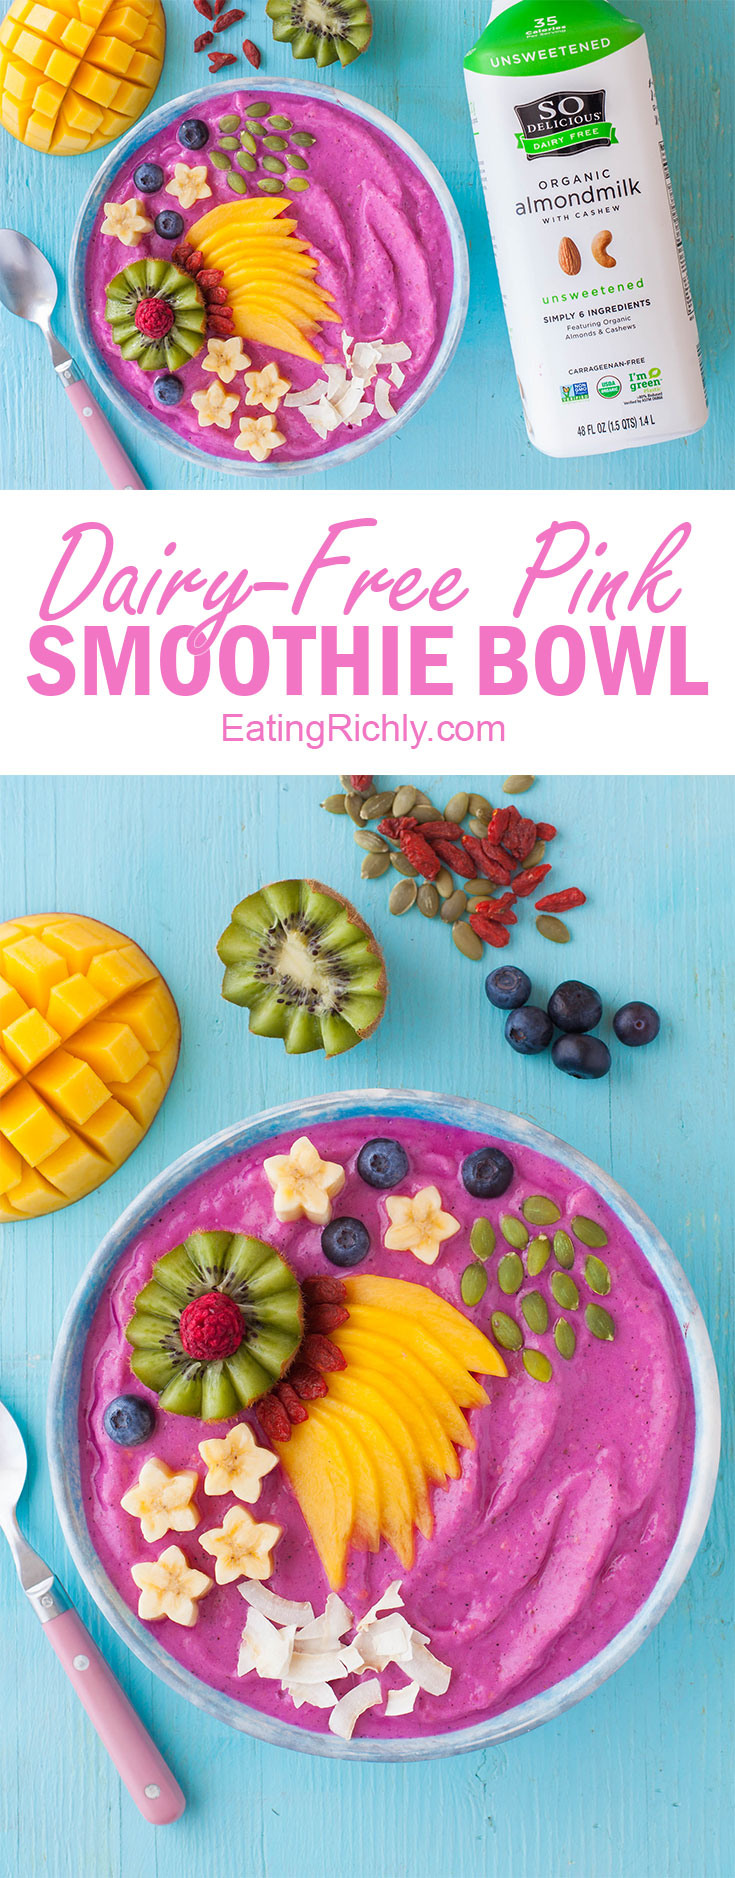 Pink Dairy Free Smoothie Bowl Recipe with So Delicious Almond Milk Carton